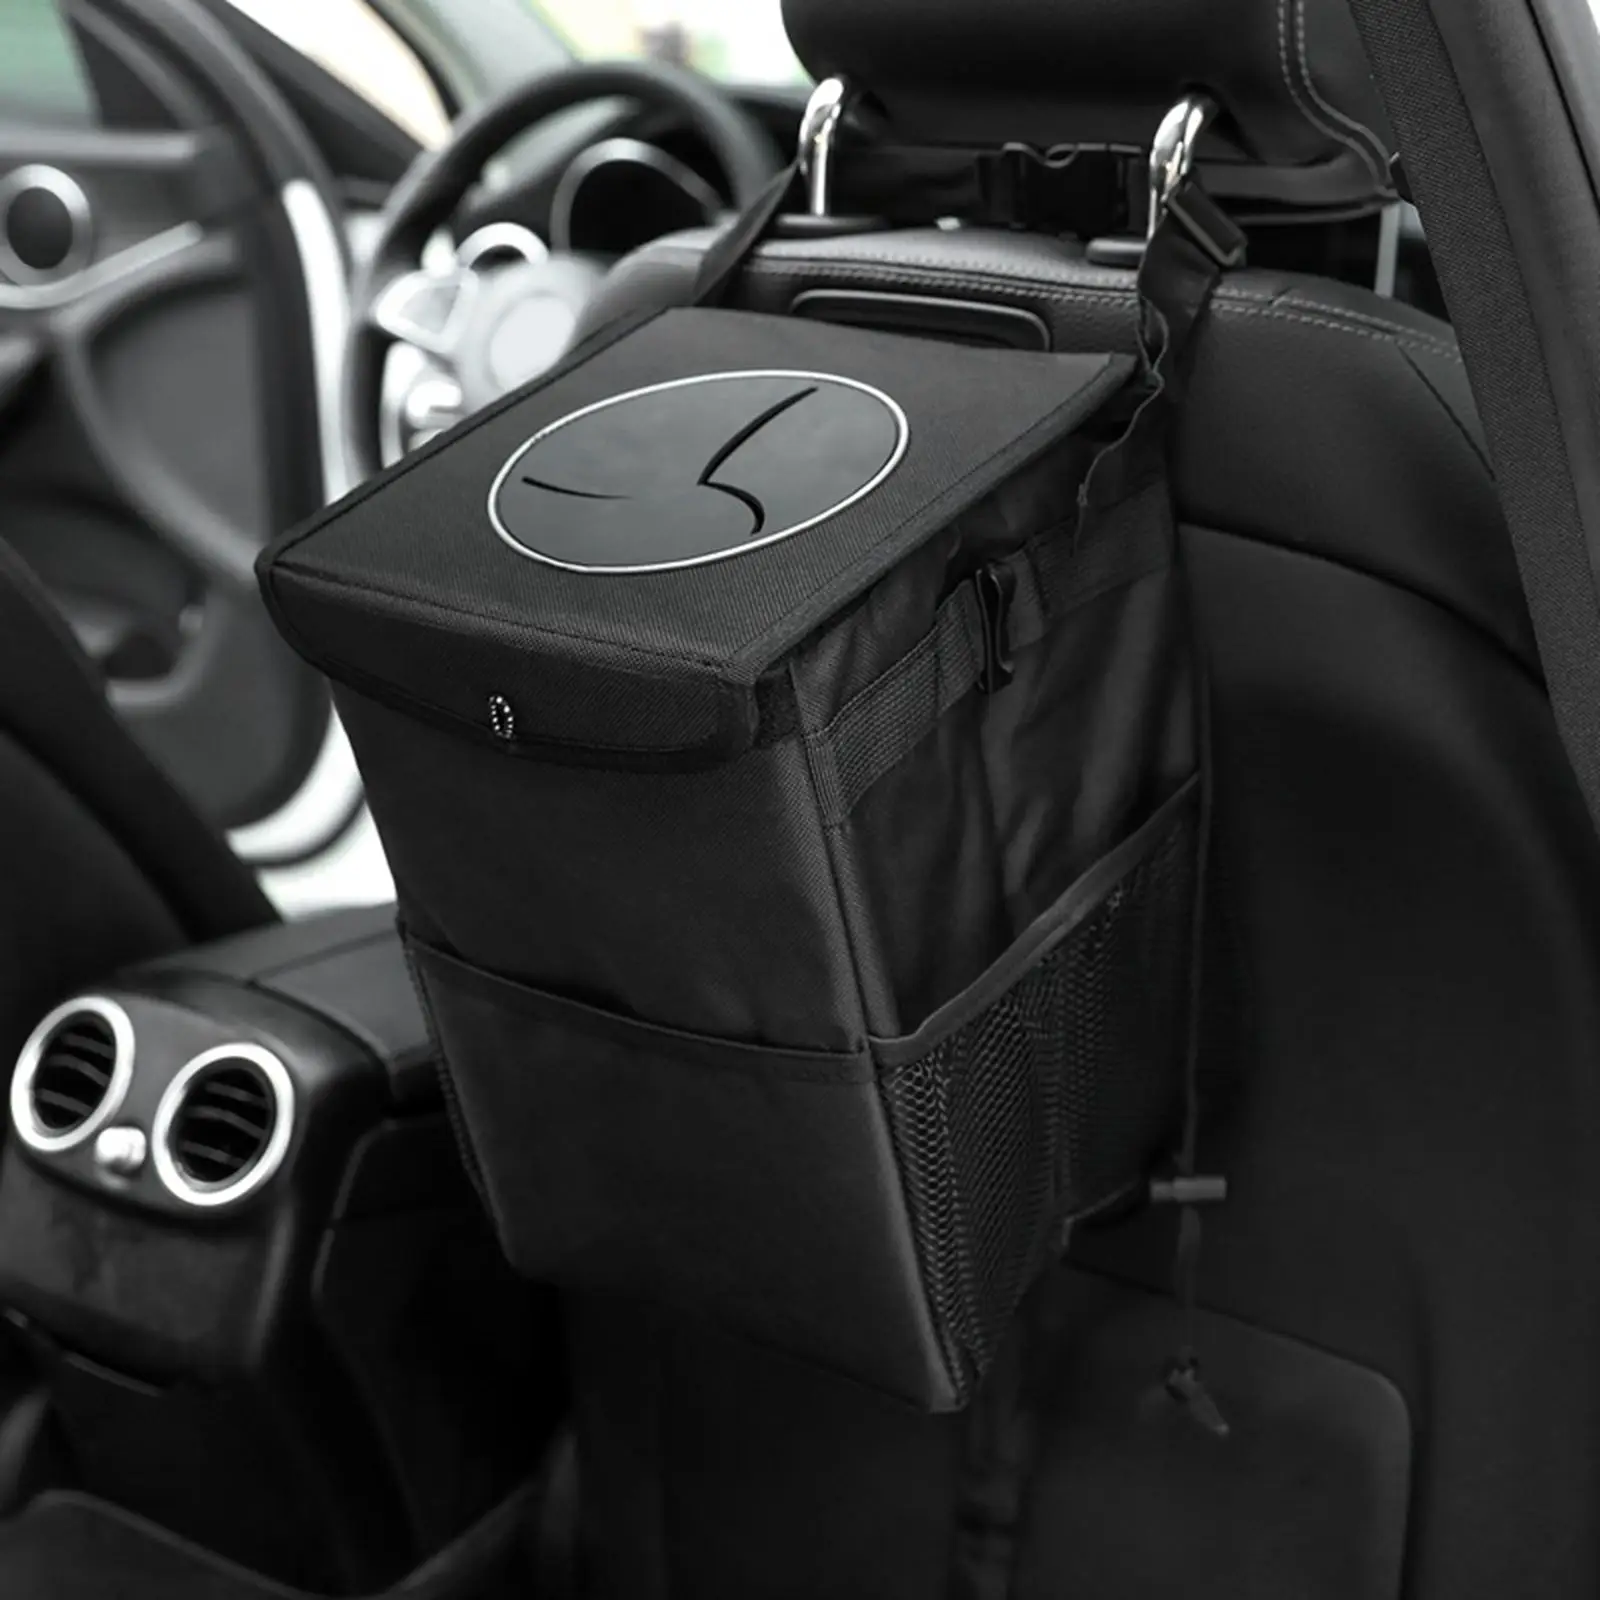 Portable Car Seat Back Garbage Bag Car Auto Trash Can Leak-proof Dust Holder Case Box Car Styling Oxford Cloth